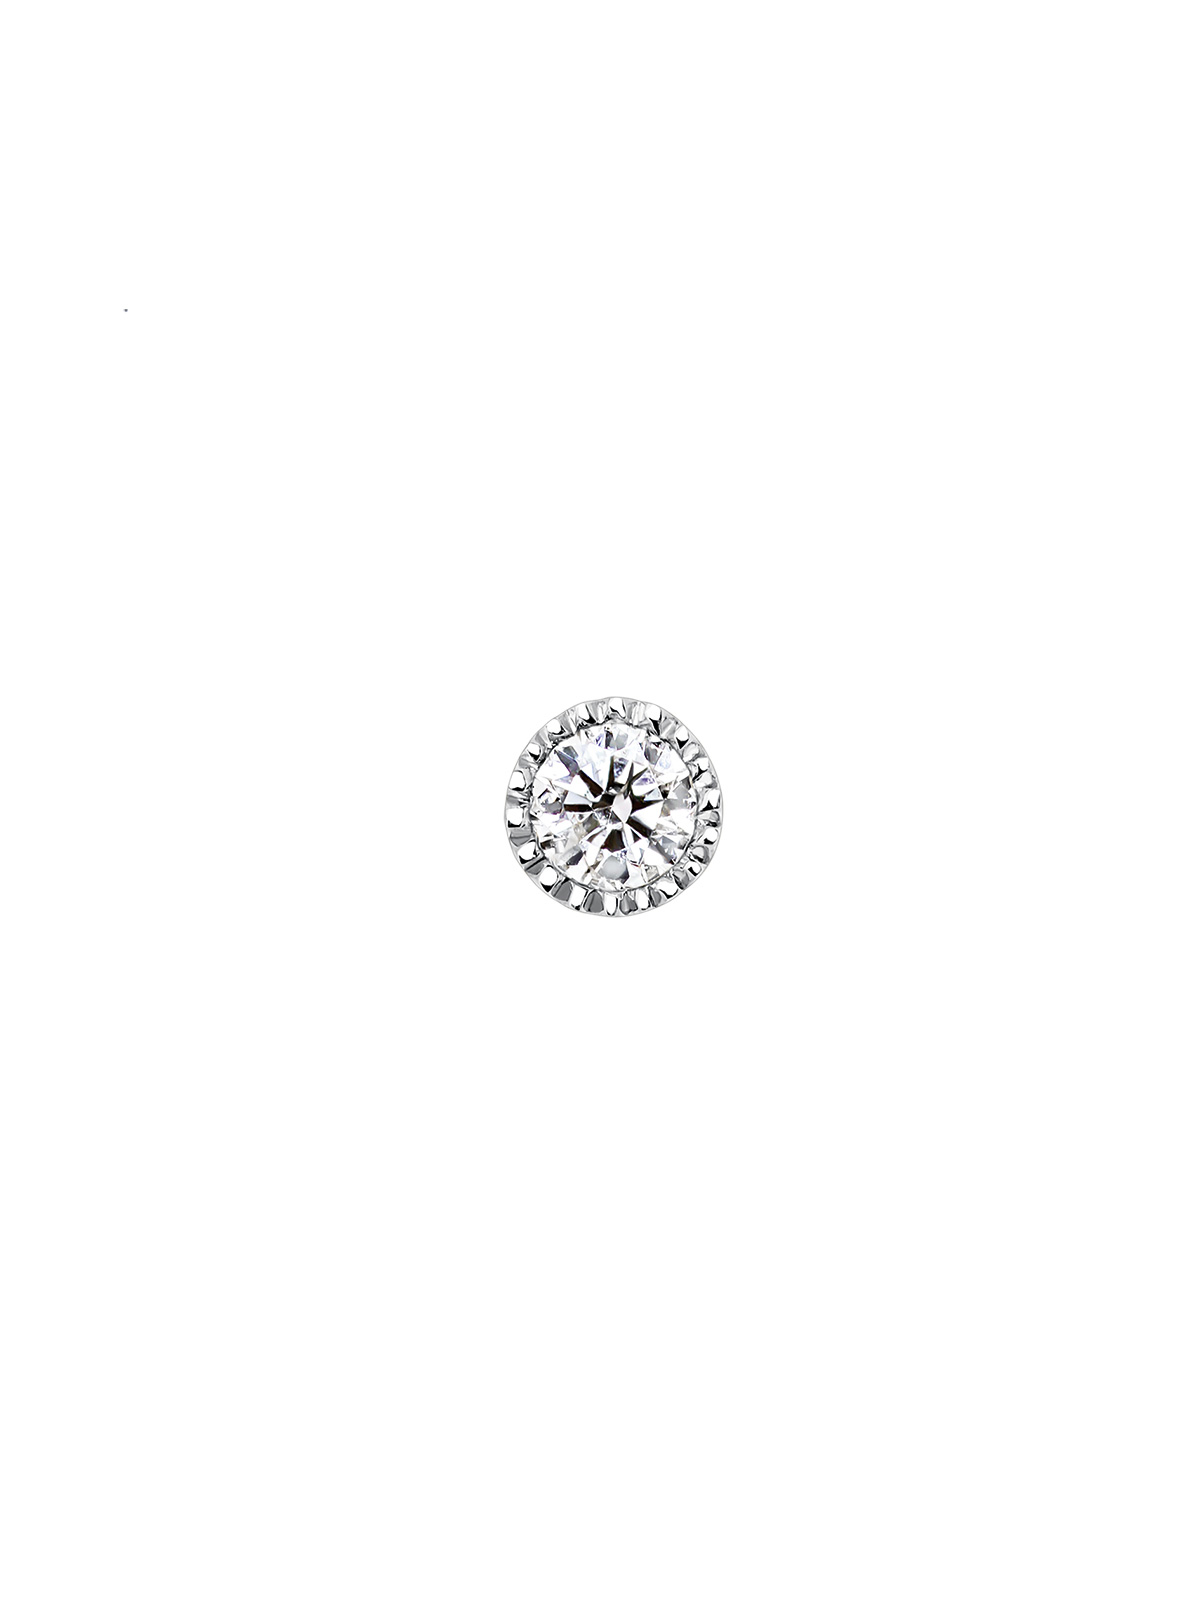 18K white gold single earring with diamond